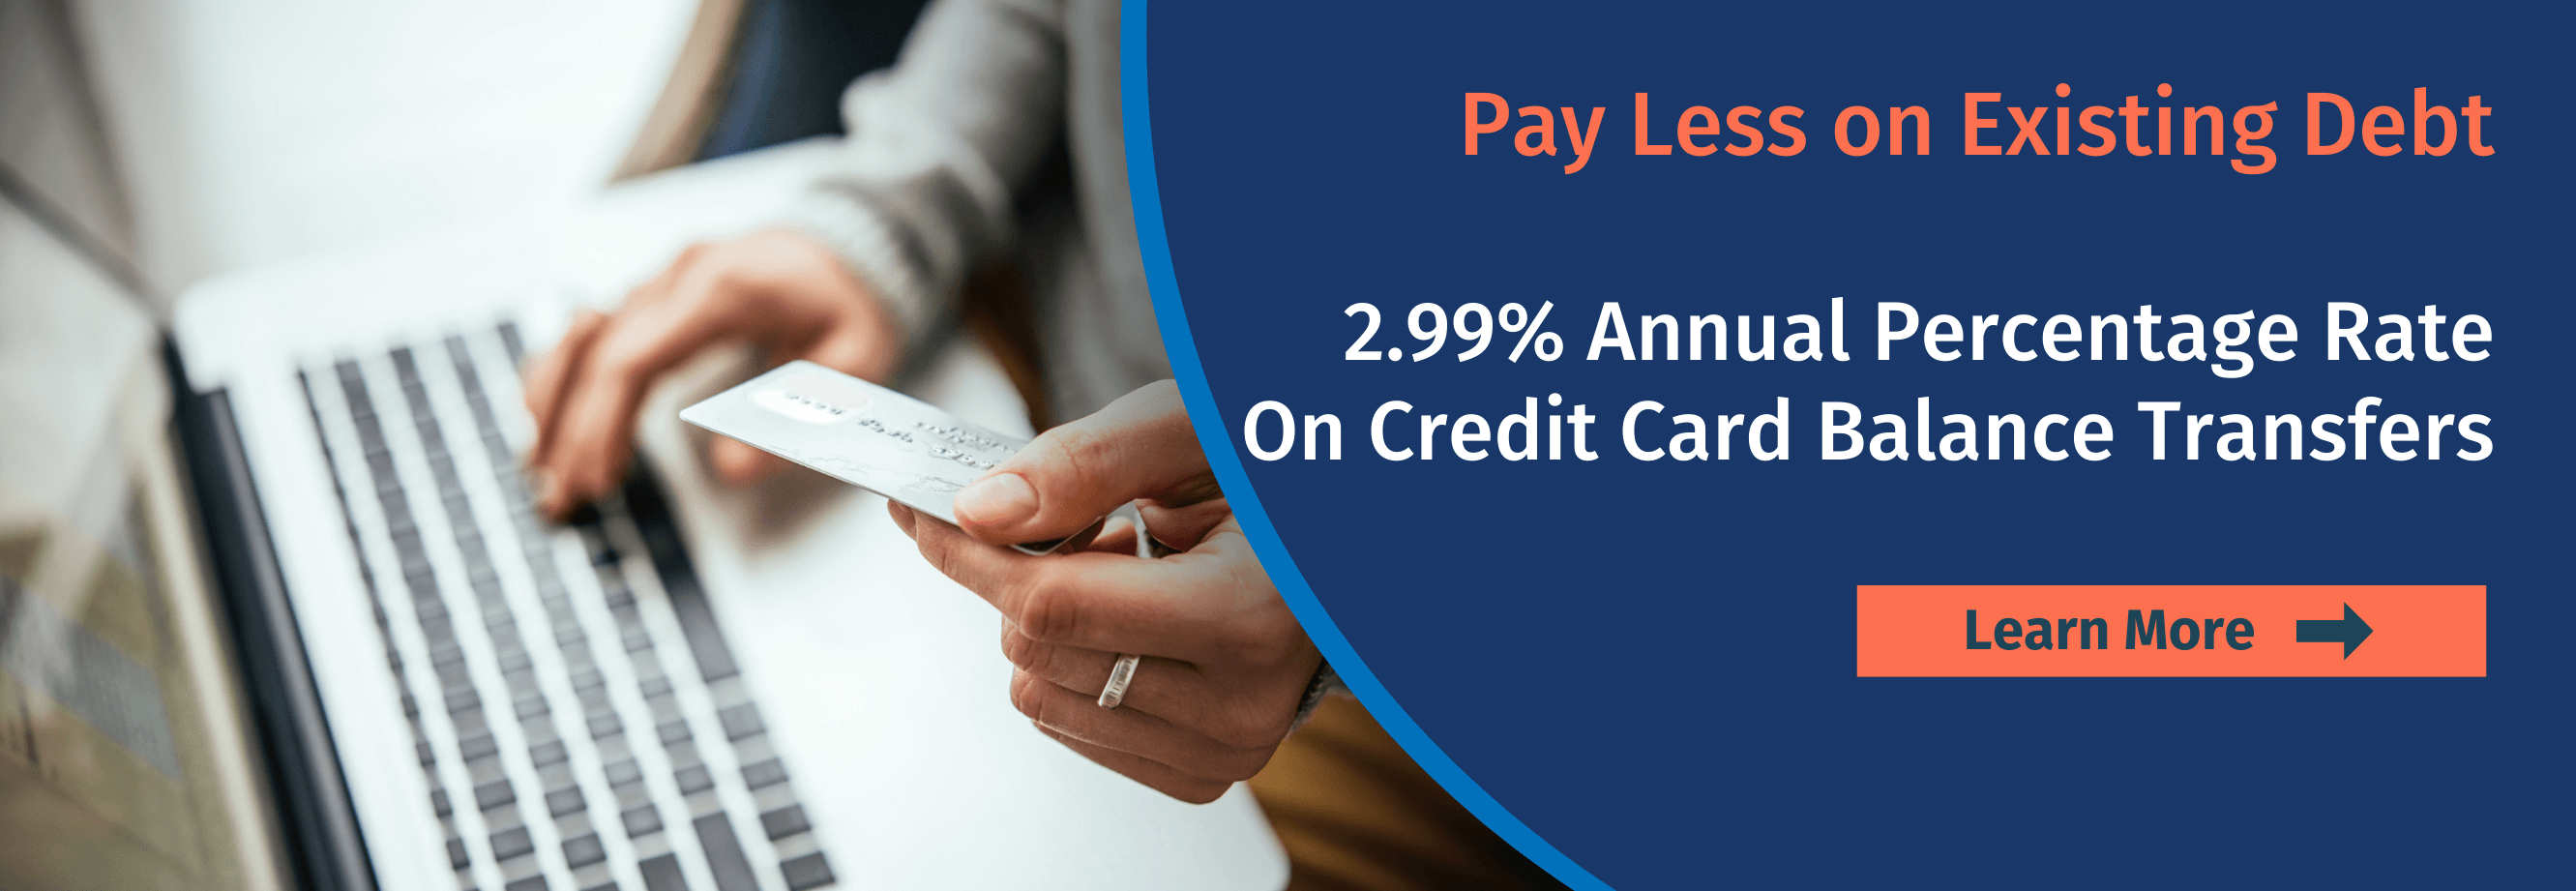 Credit Card Balance Transfer Promotion